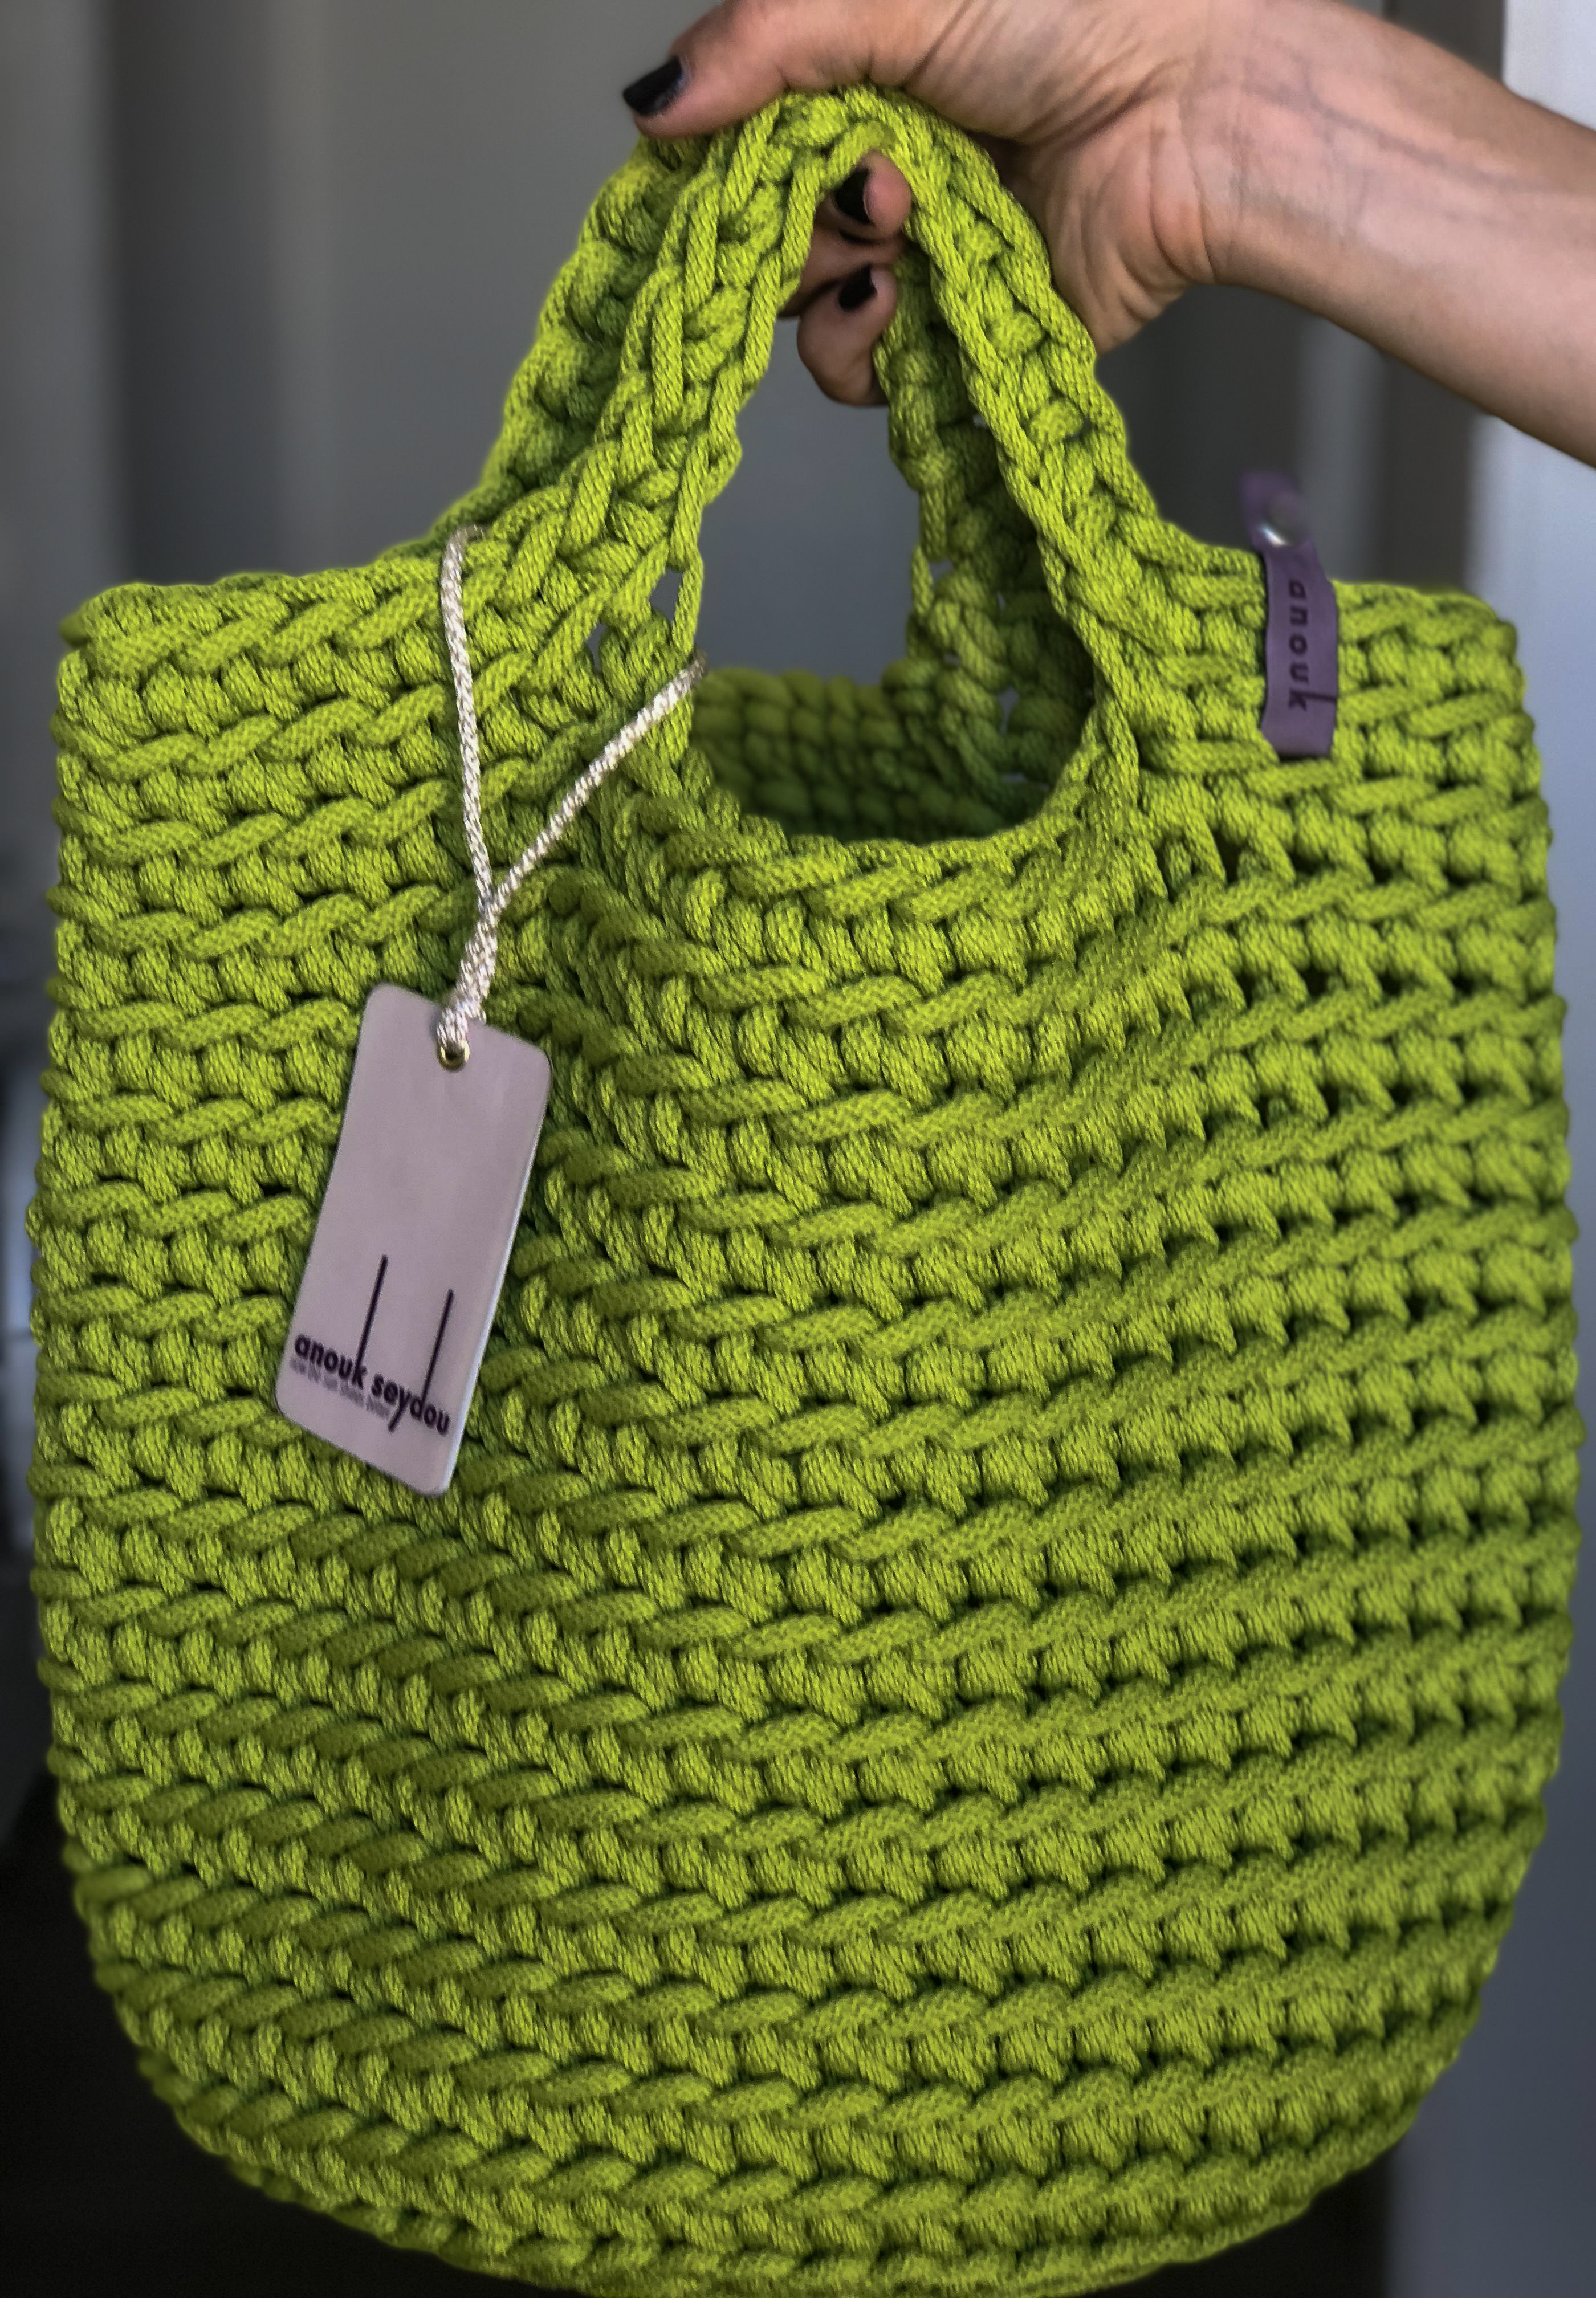 Crochet Tote Bag Free Patterns 30 Easy Crochet Tote Bag Patterns 